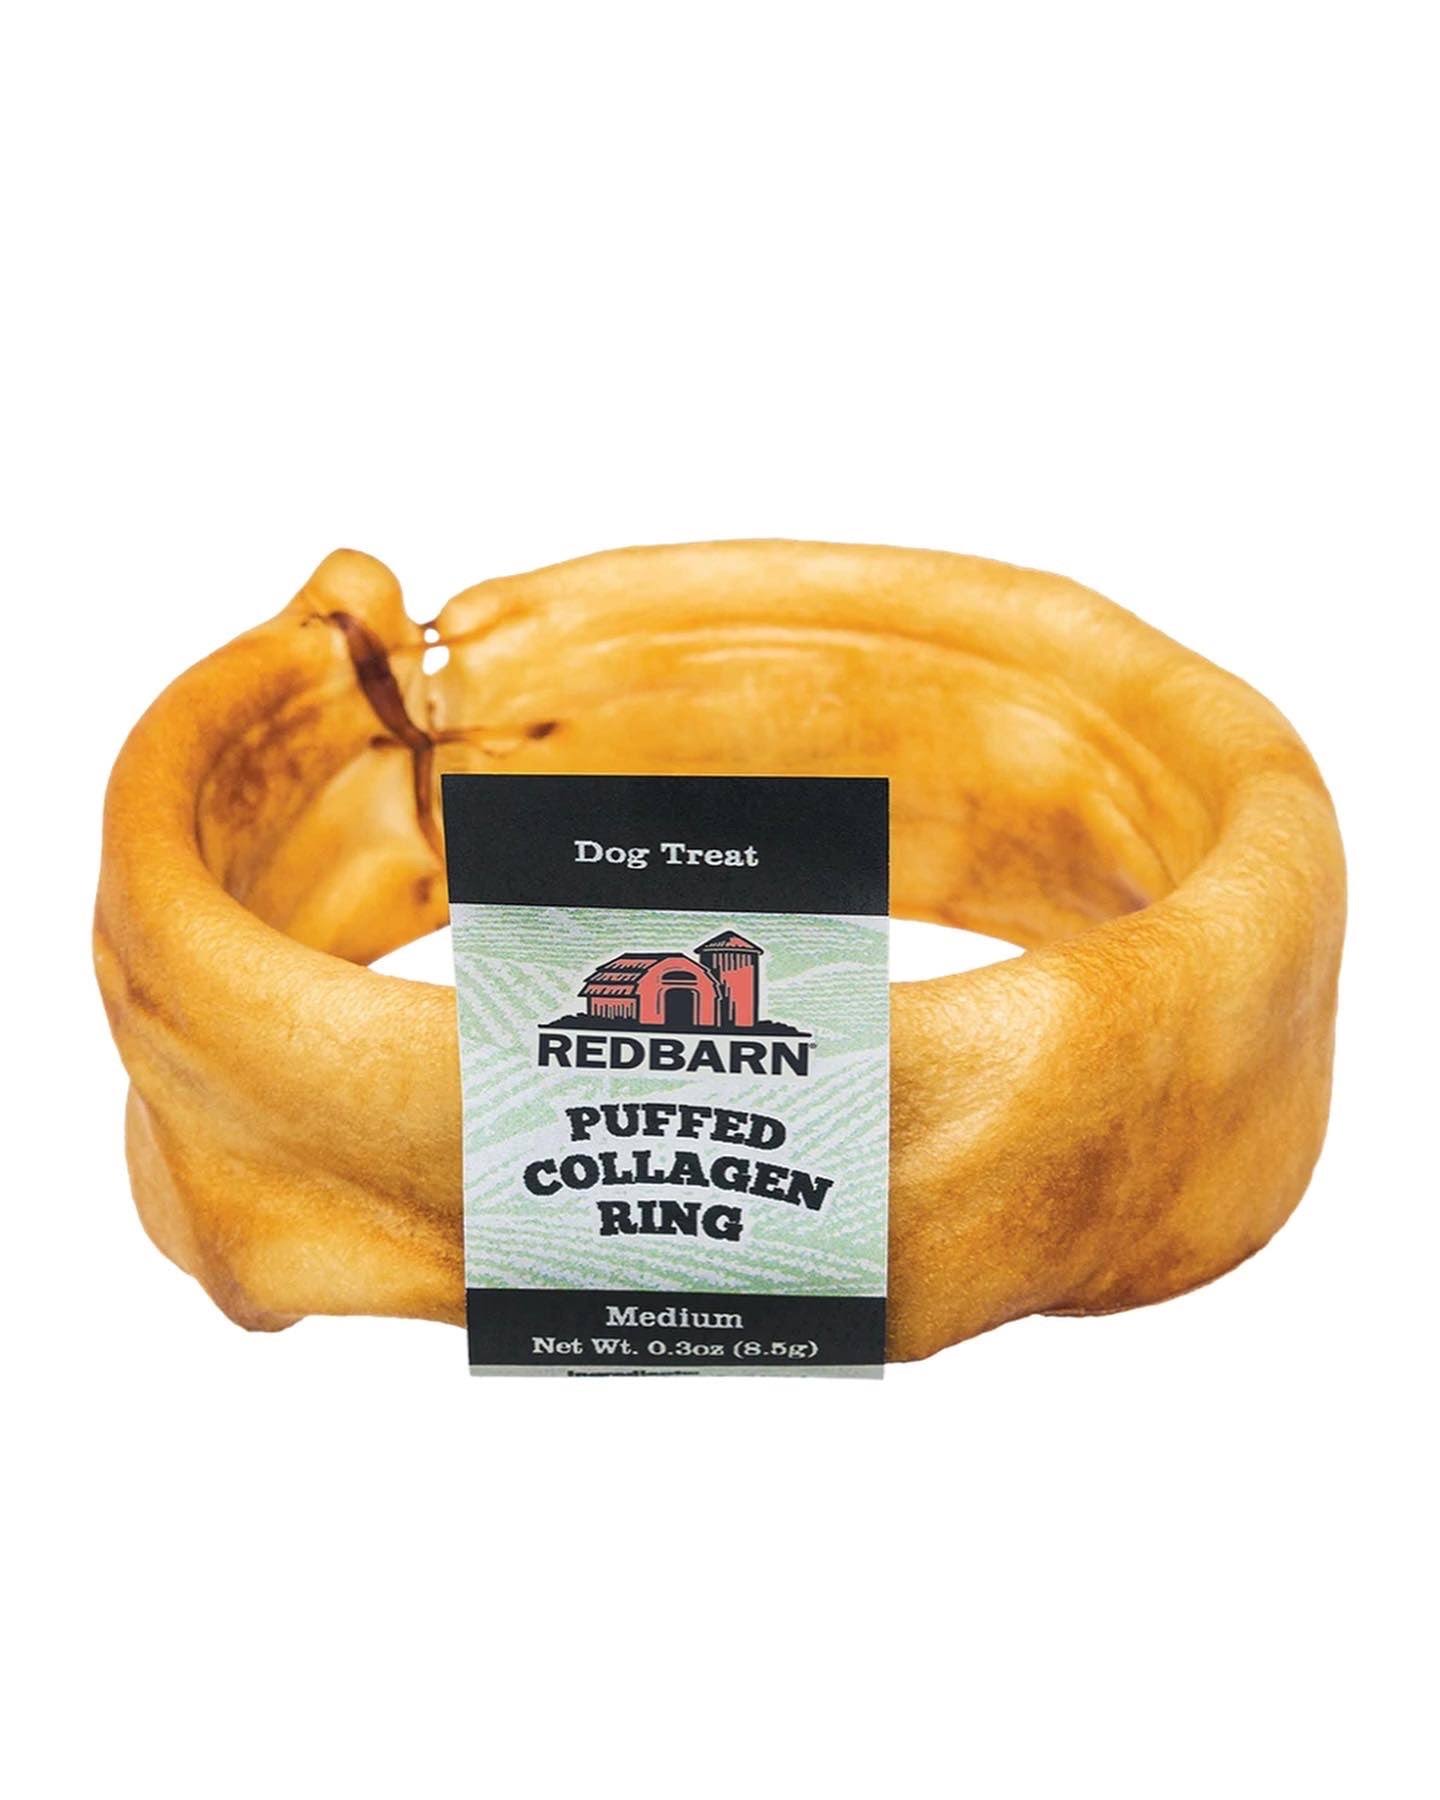 Redbarn Puffed Collagen Ring